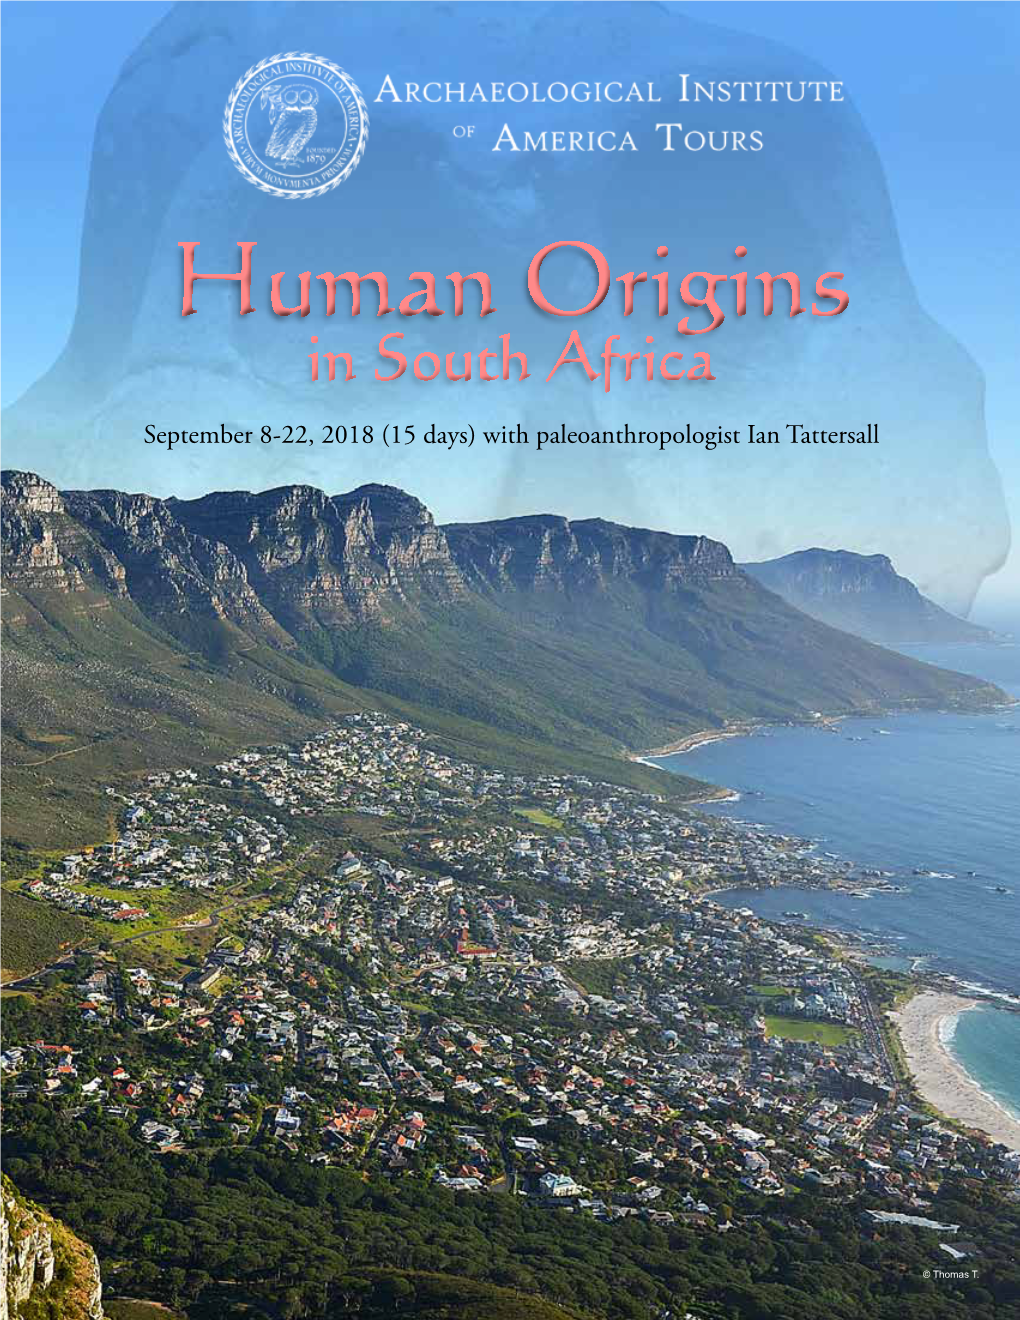 Human Origins in South Africa